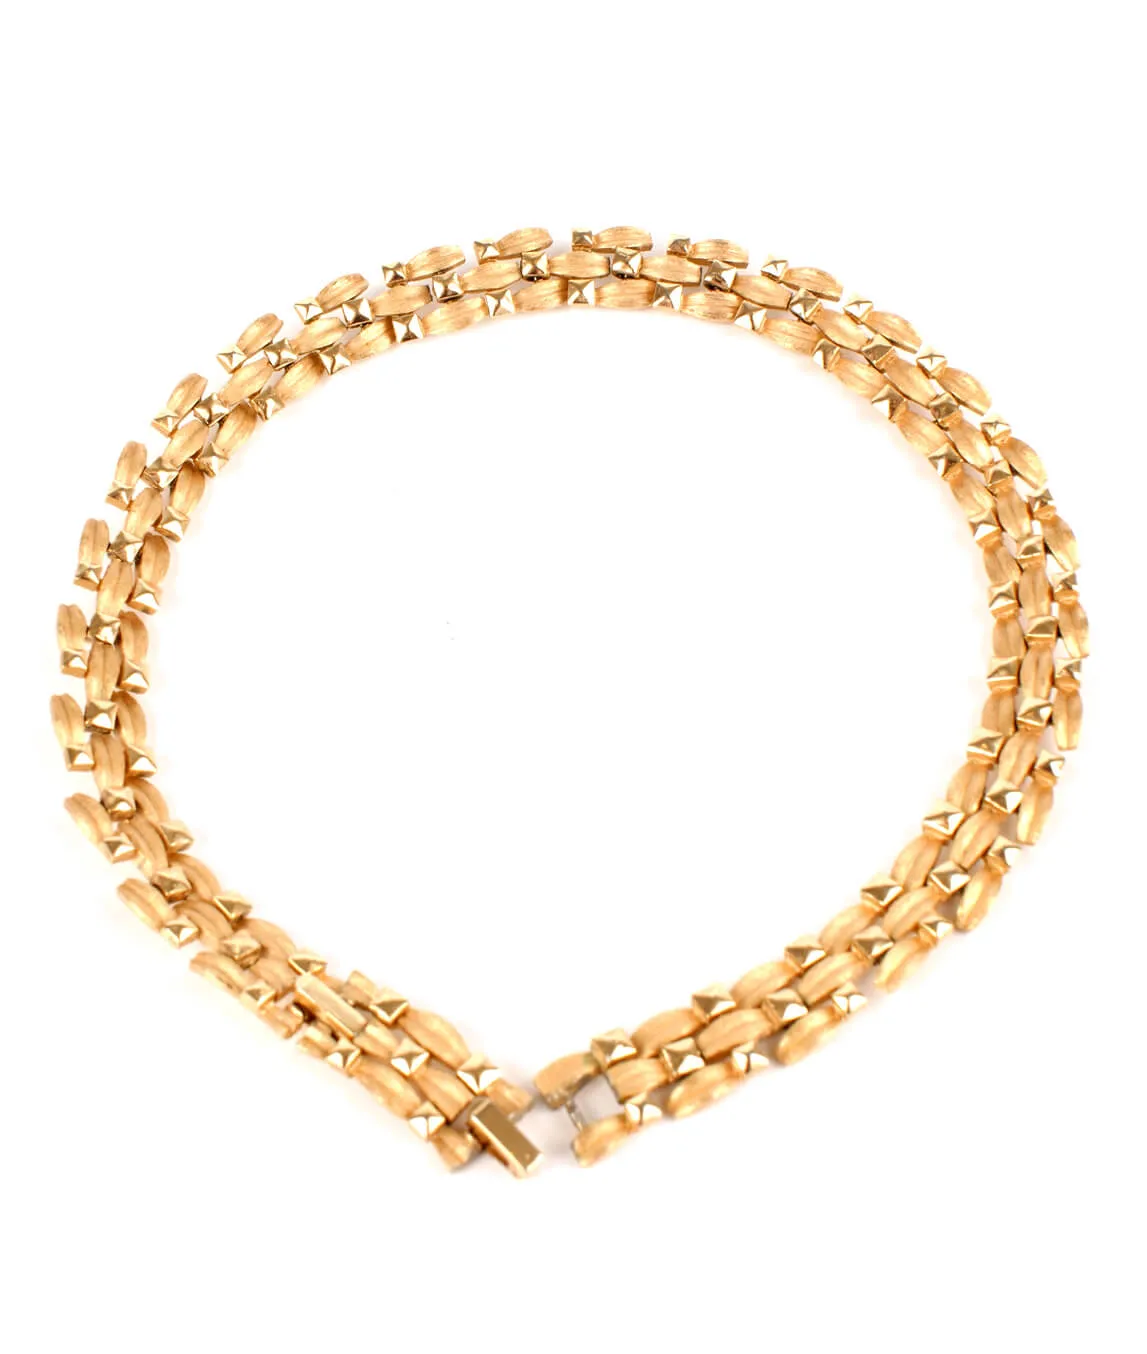 Crown Trifari Modernist Necklace | Gadelles Vintage